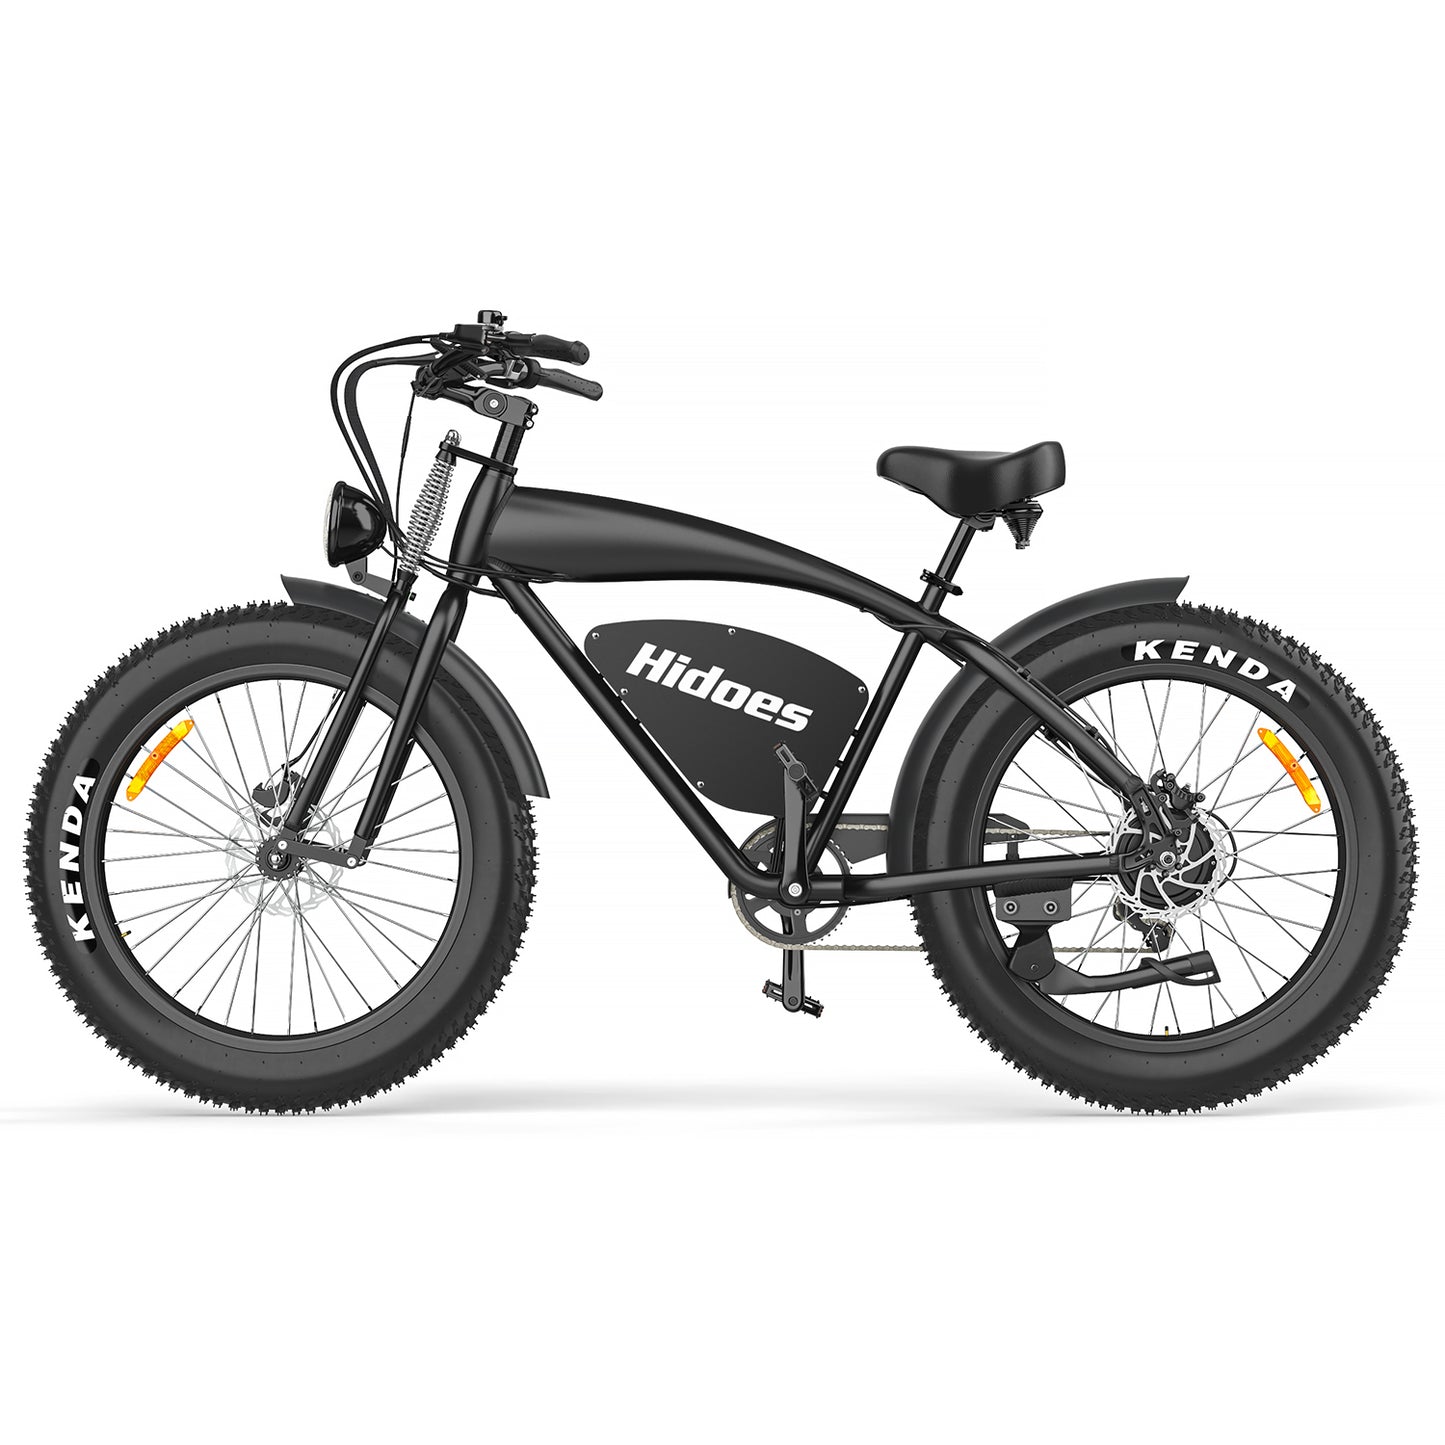 Hidoes B3 fat tire electric bike online, best budget electric mountain bike